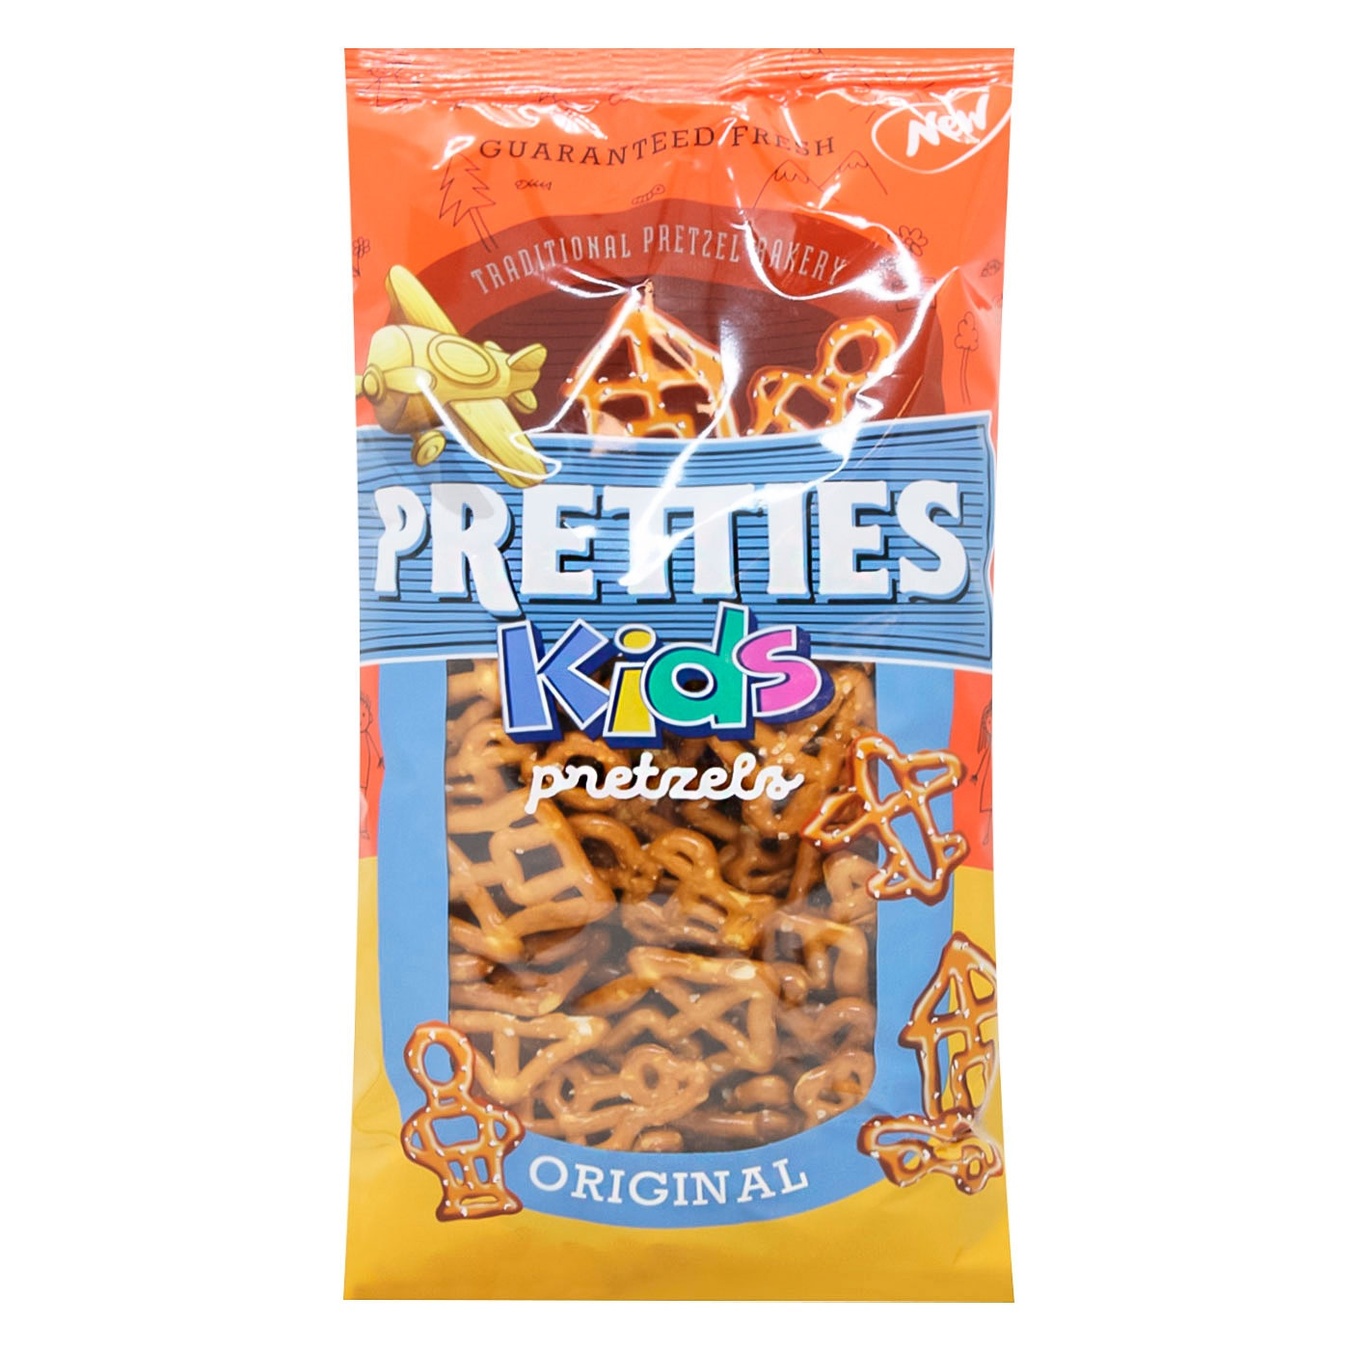 Cracker Venus pretzels with salt pritic kids 227g